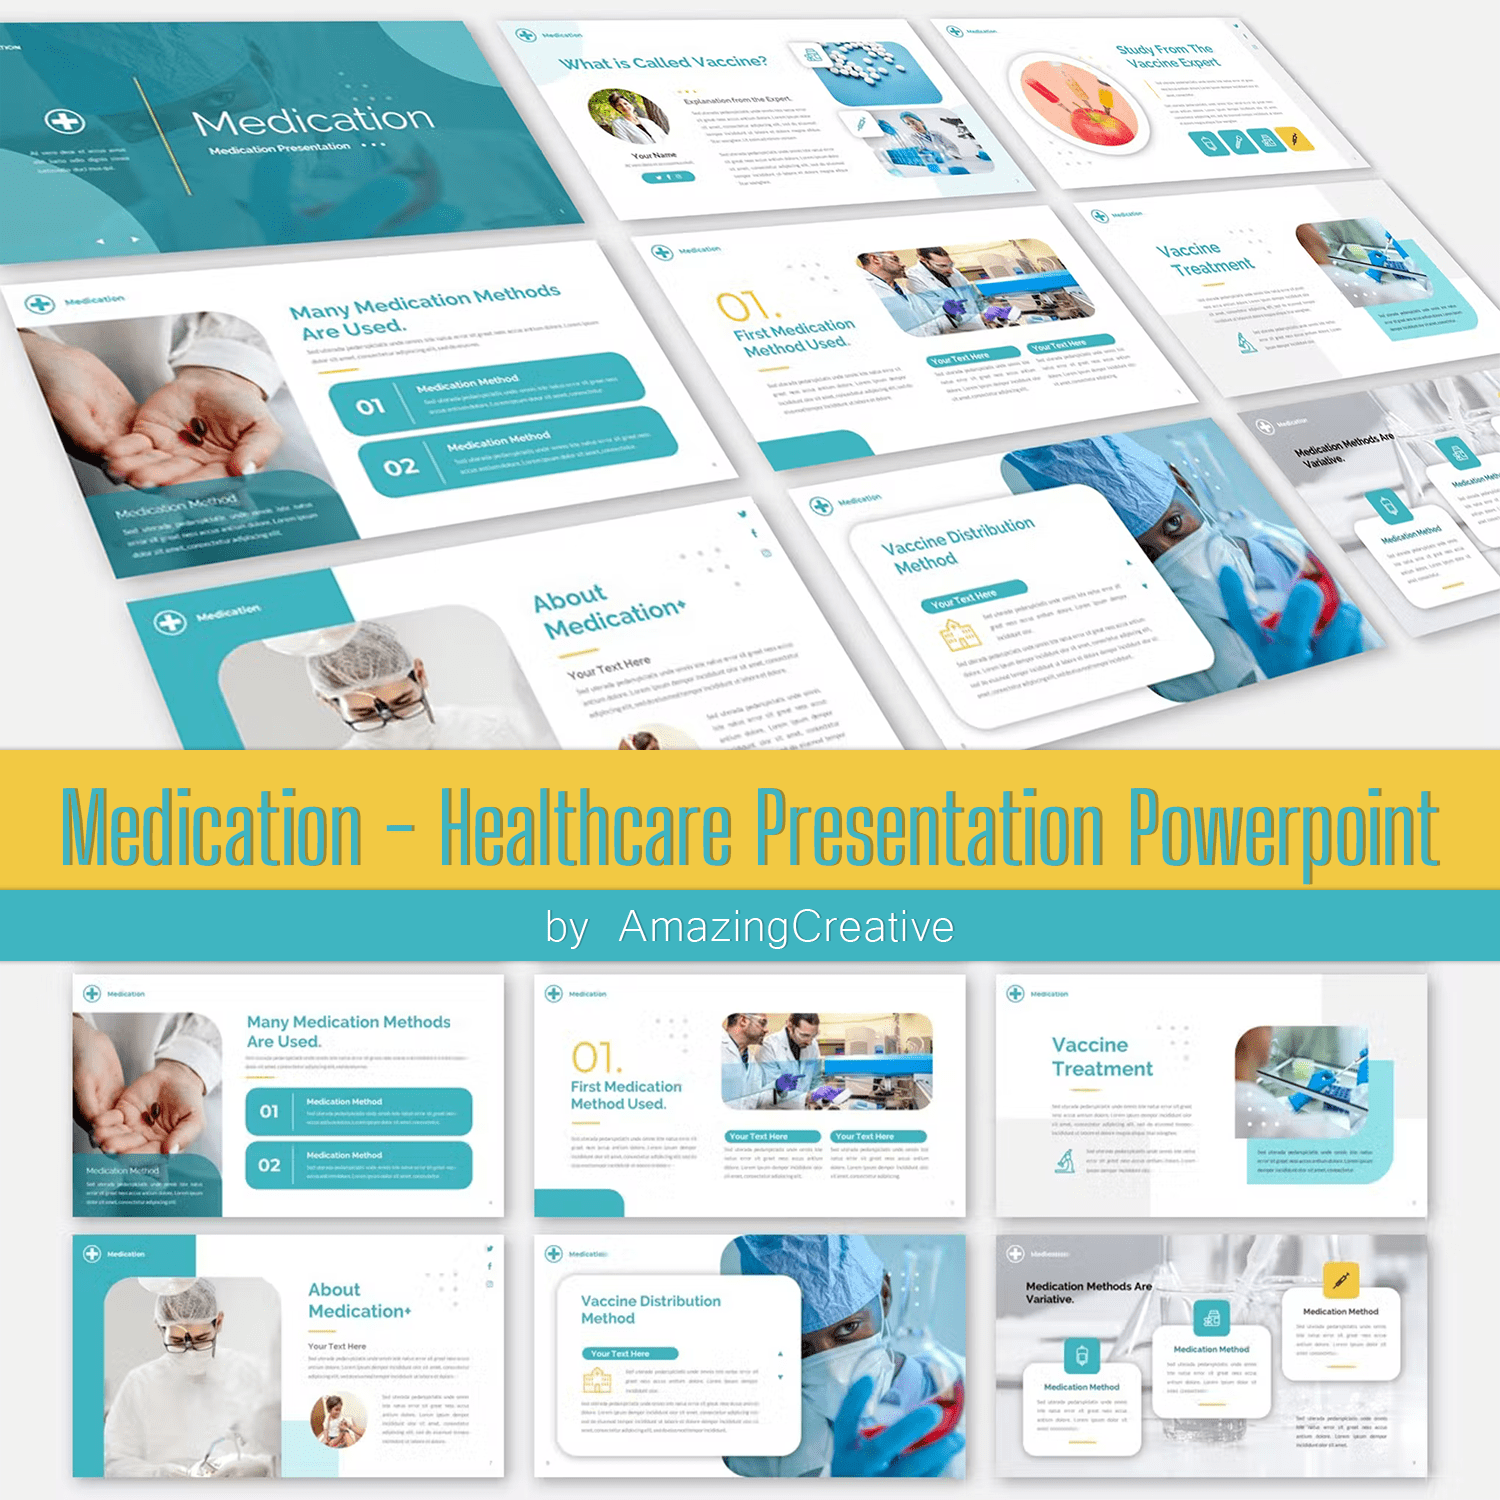 Medication - Healthcare Presentation Powerpoint.